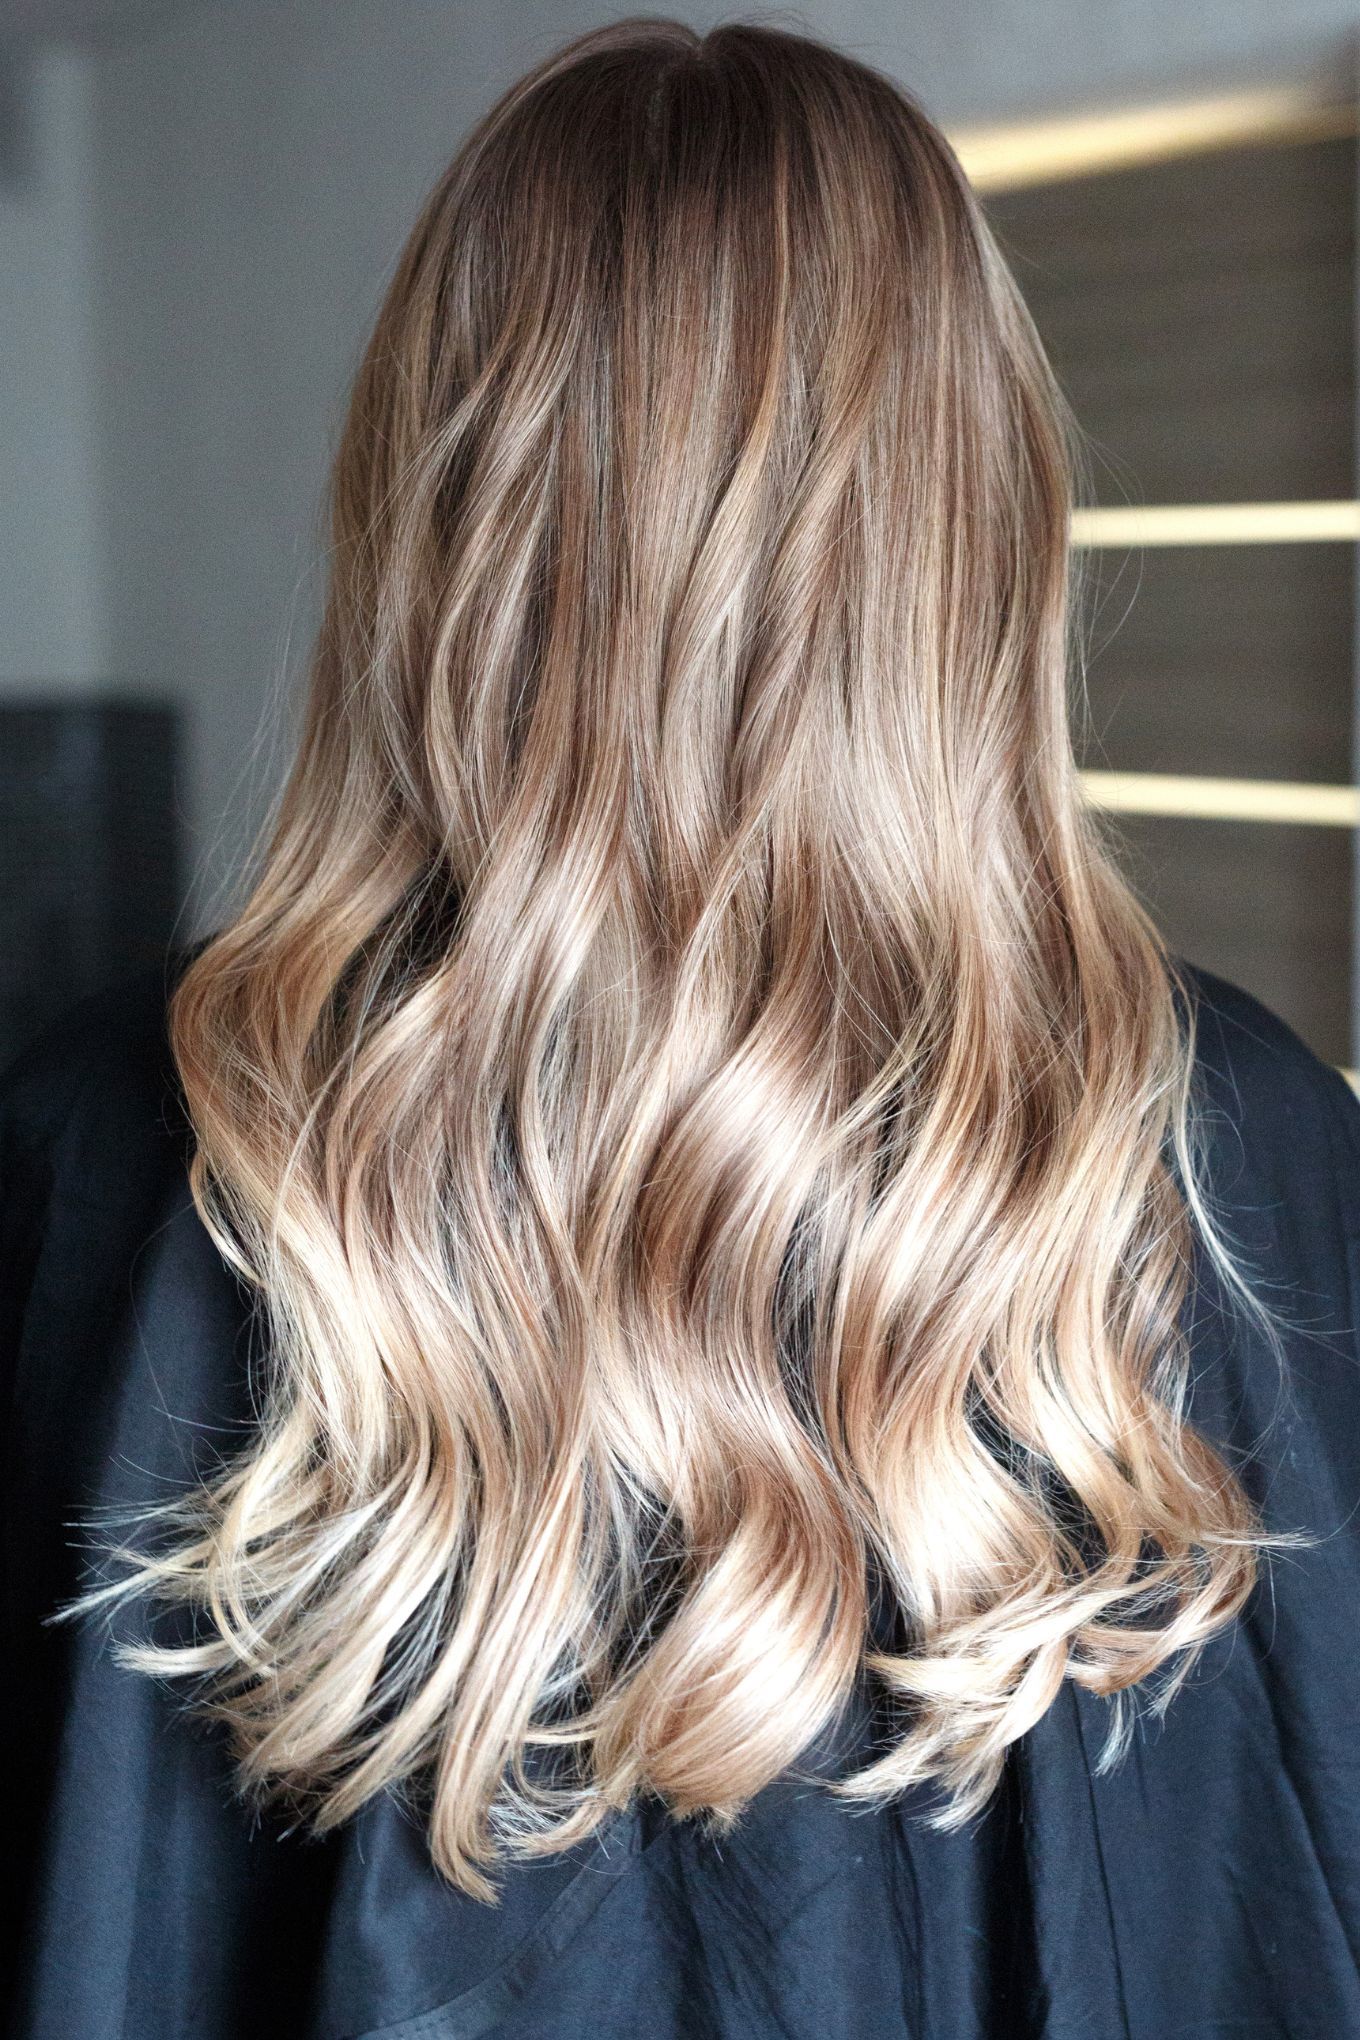 Dark Honey Blonde Hair: 20 Shades To Try | All Things Hair